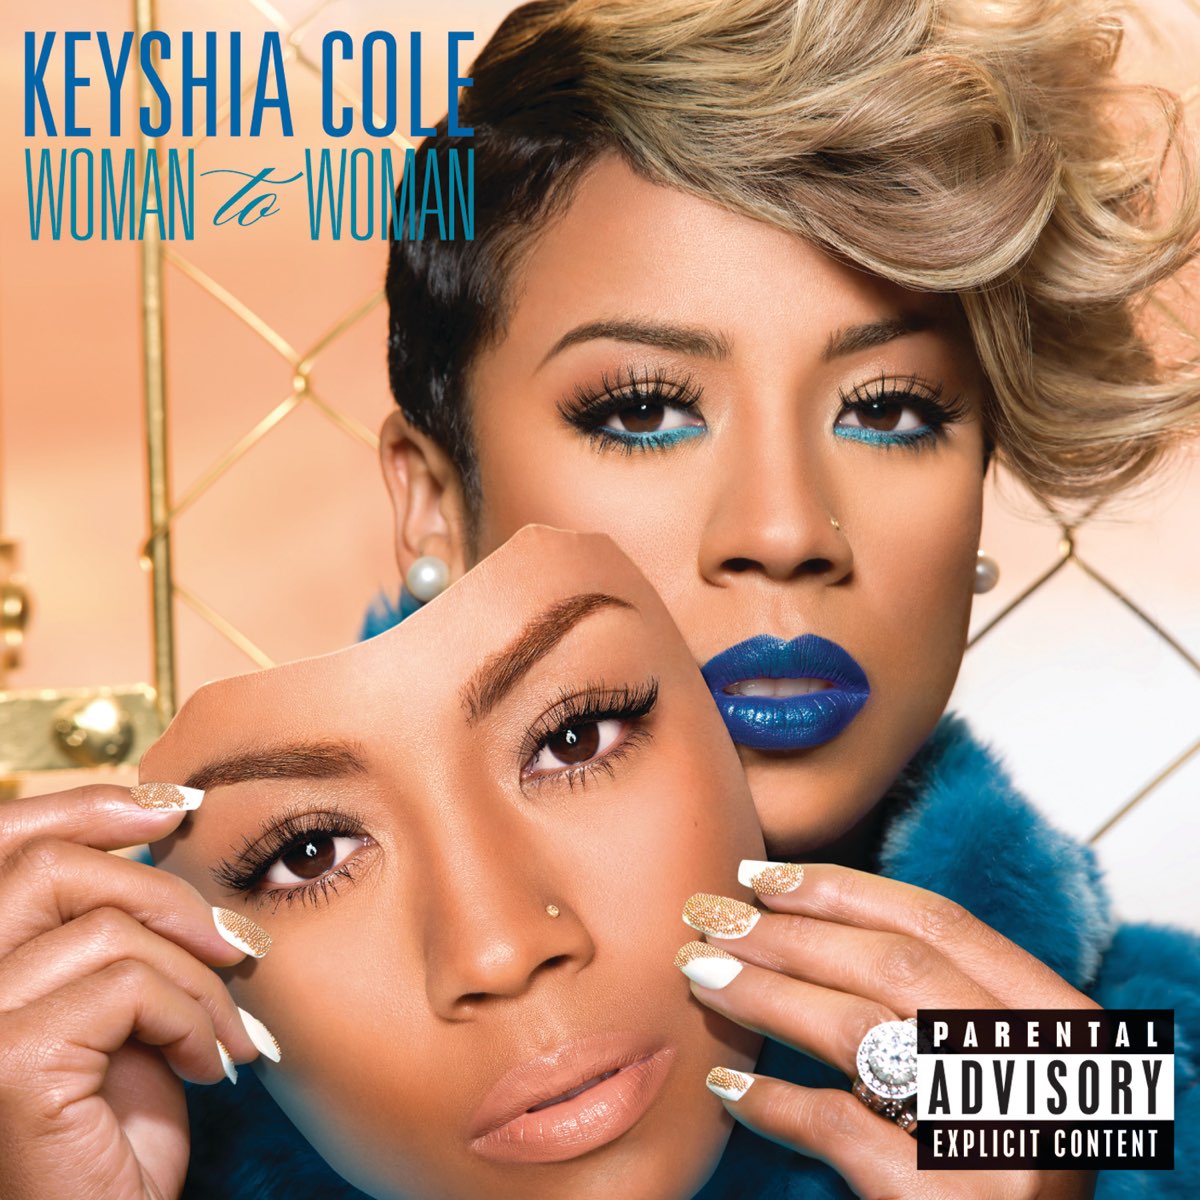 Альбом "Woman to Woman" (Keyshia Cole) .